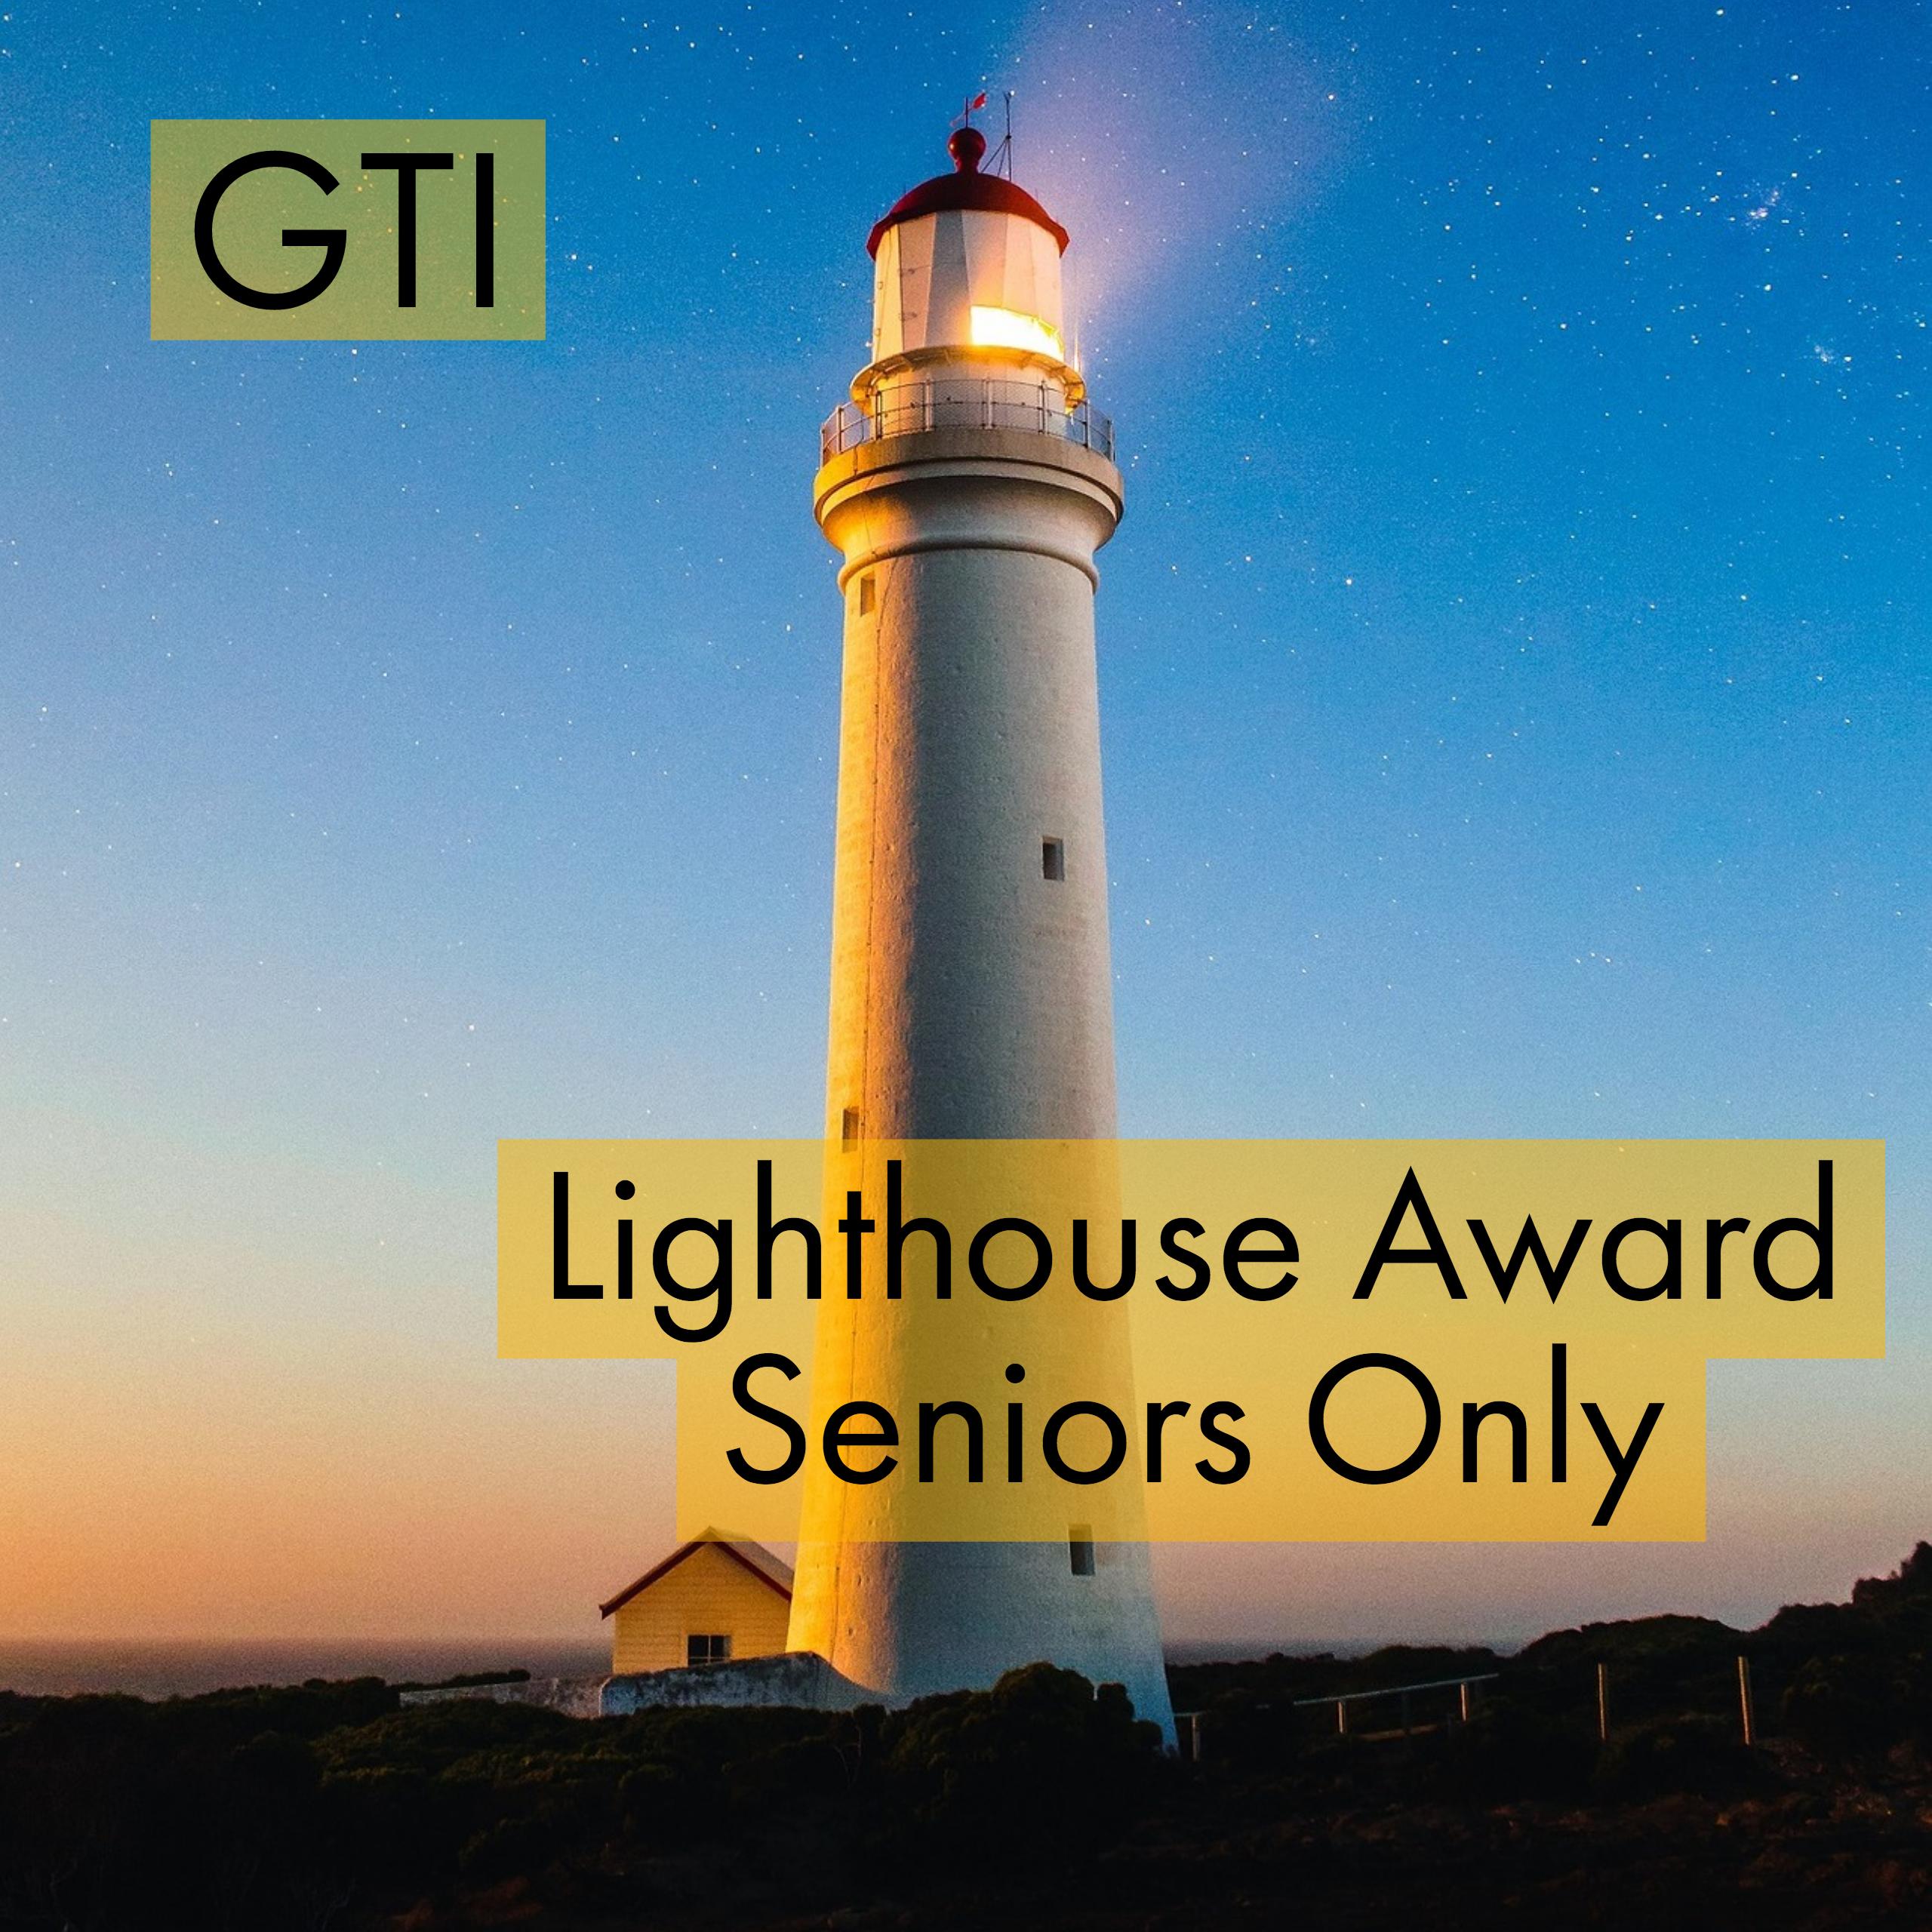 Lighthouse Award Details